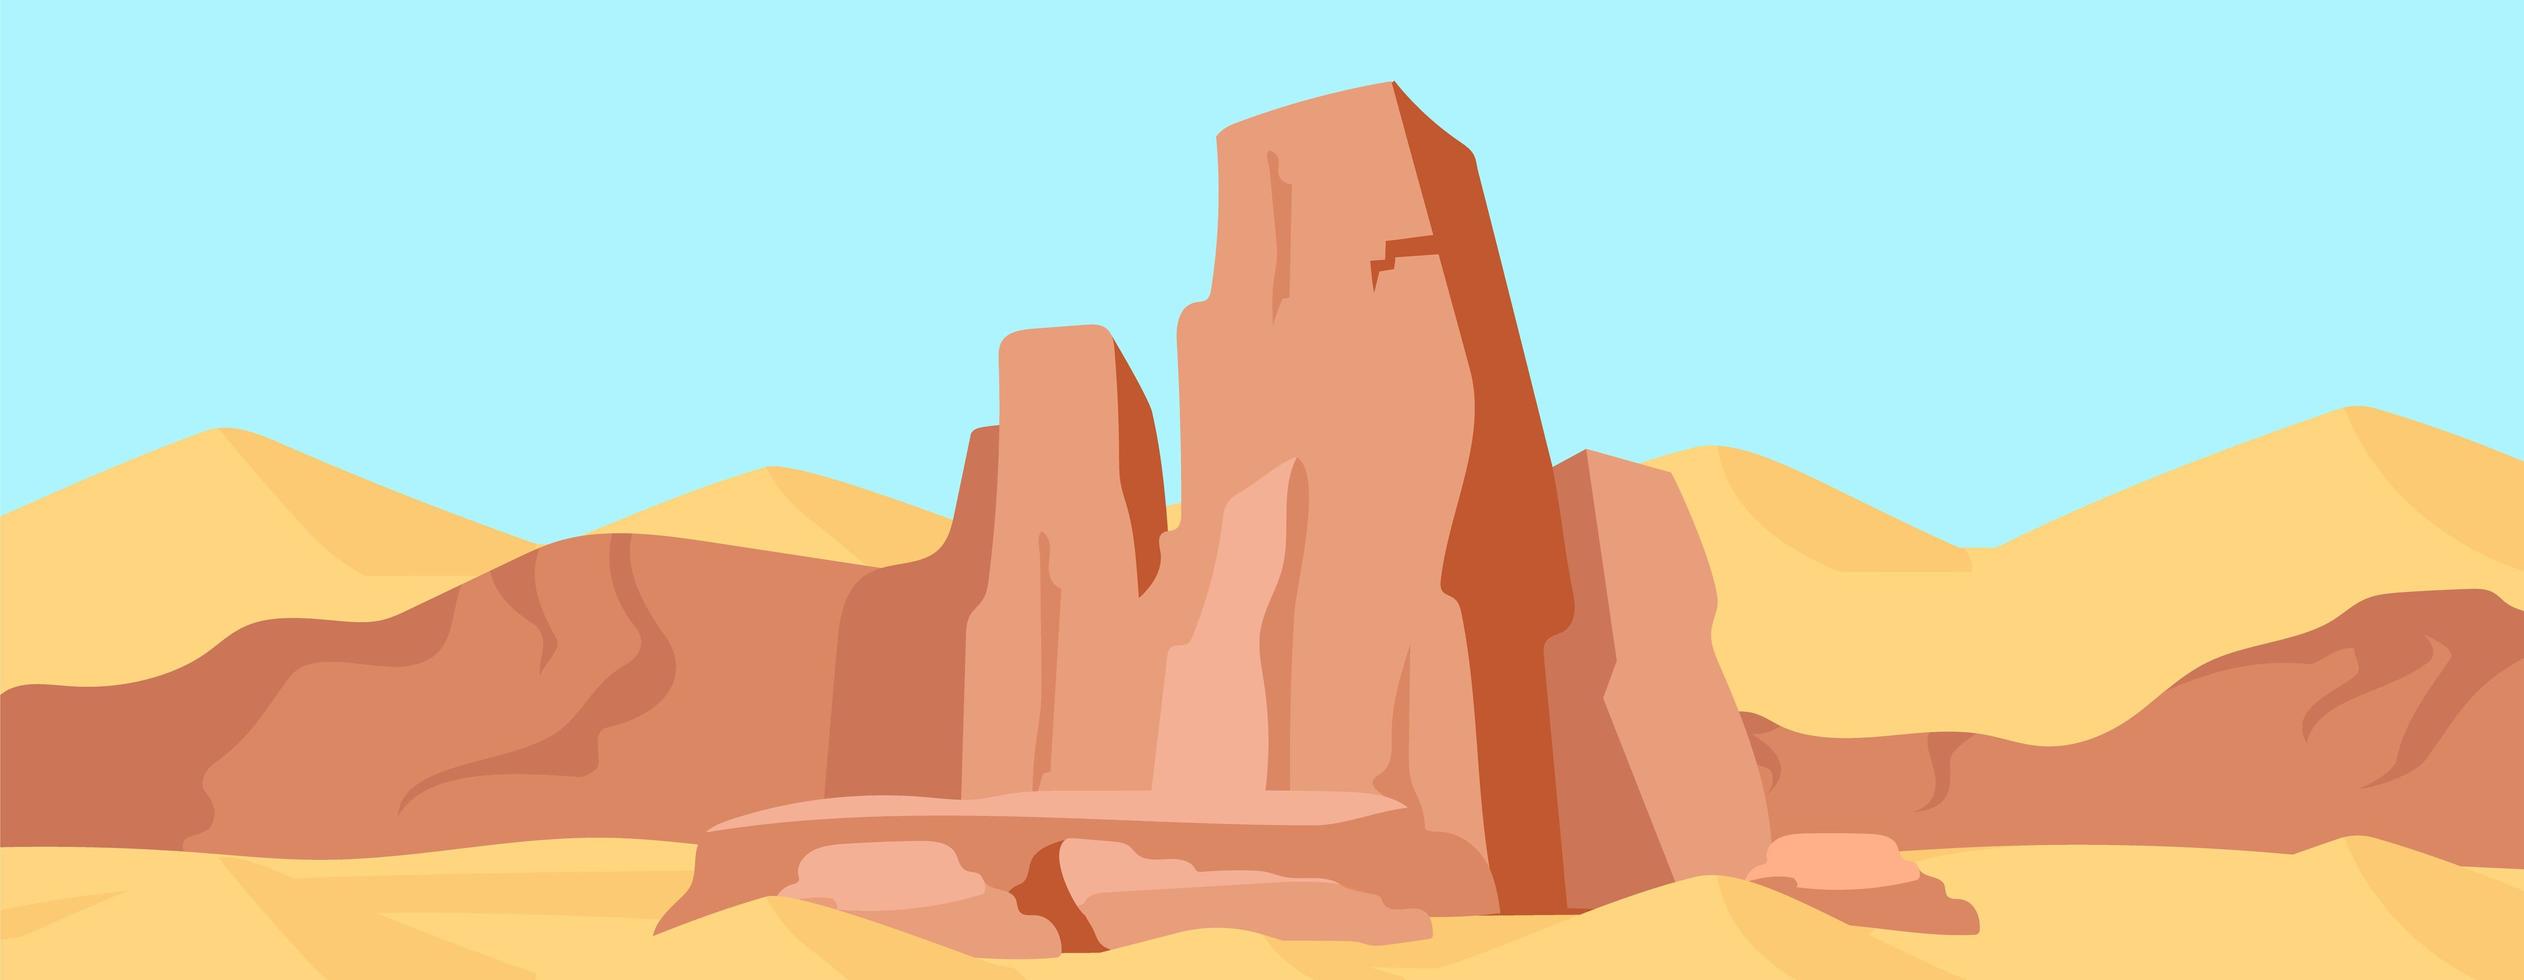 Canyon rock scene vector